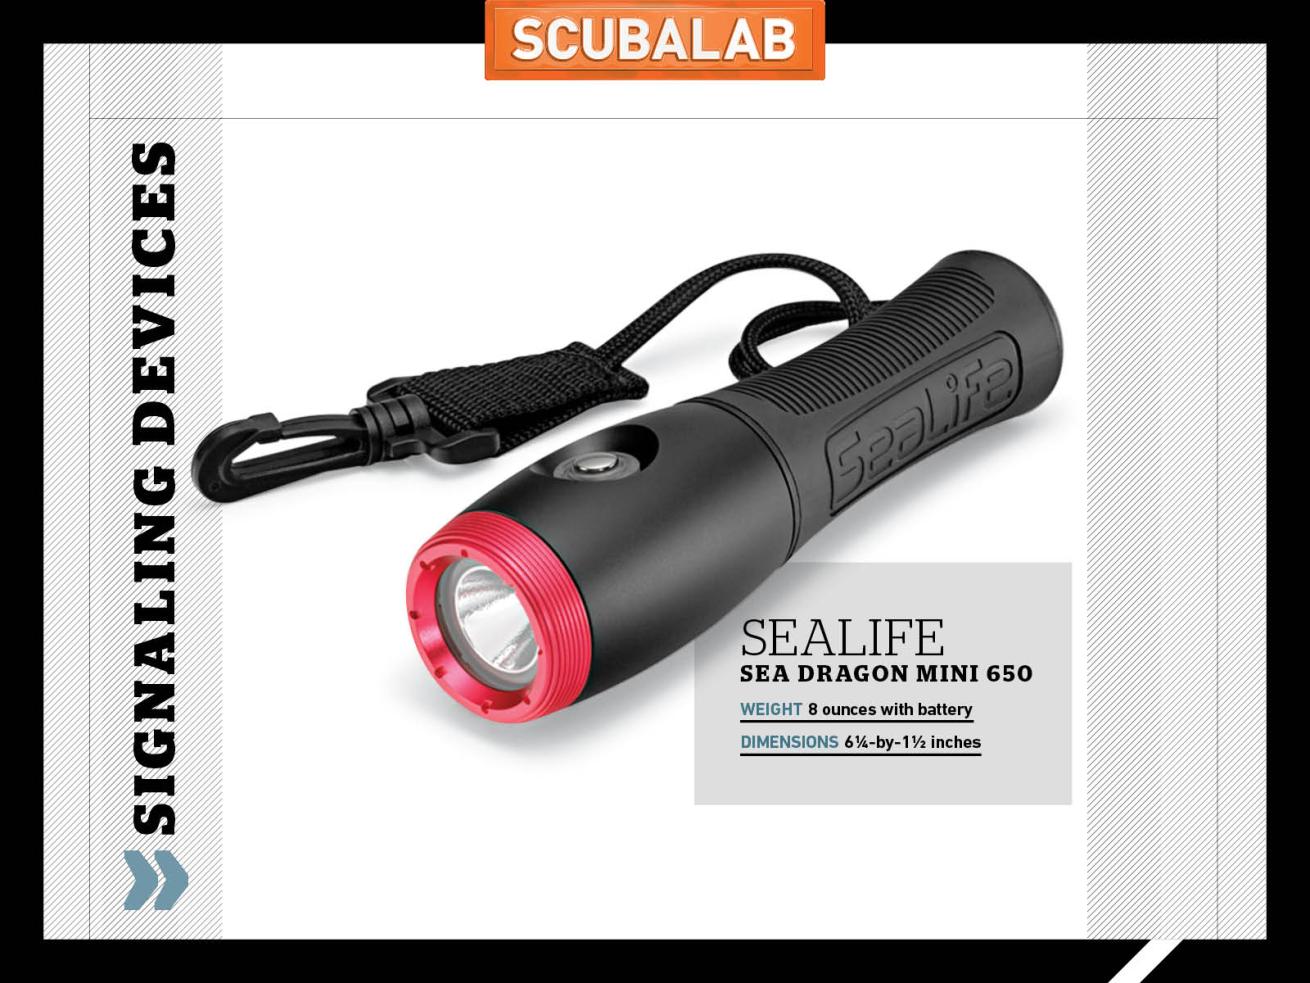 ScubaLab emergency signaling dive gear SeaLife Sea Dragon Mini 650